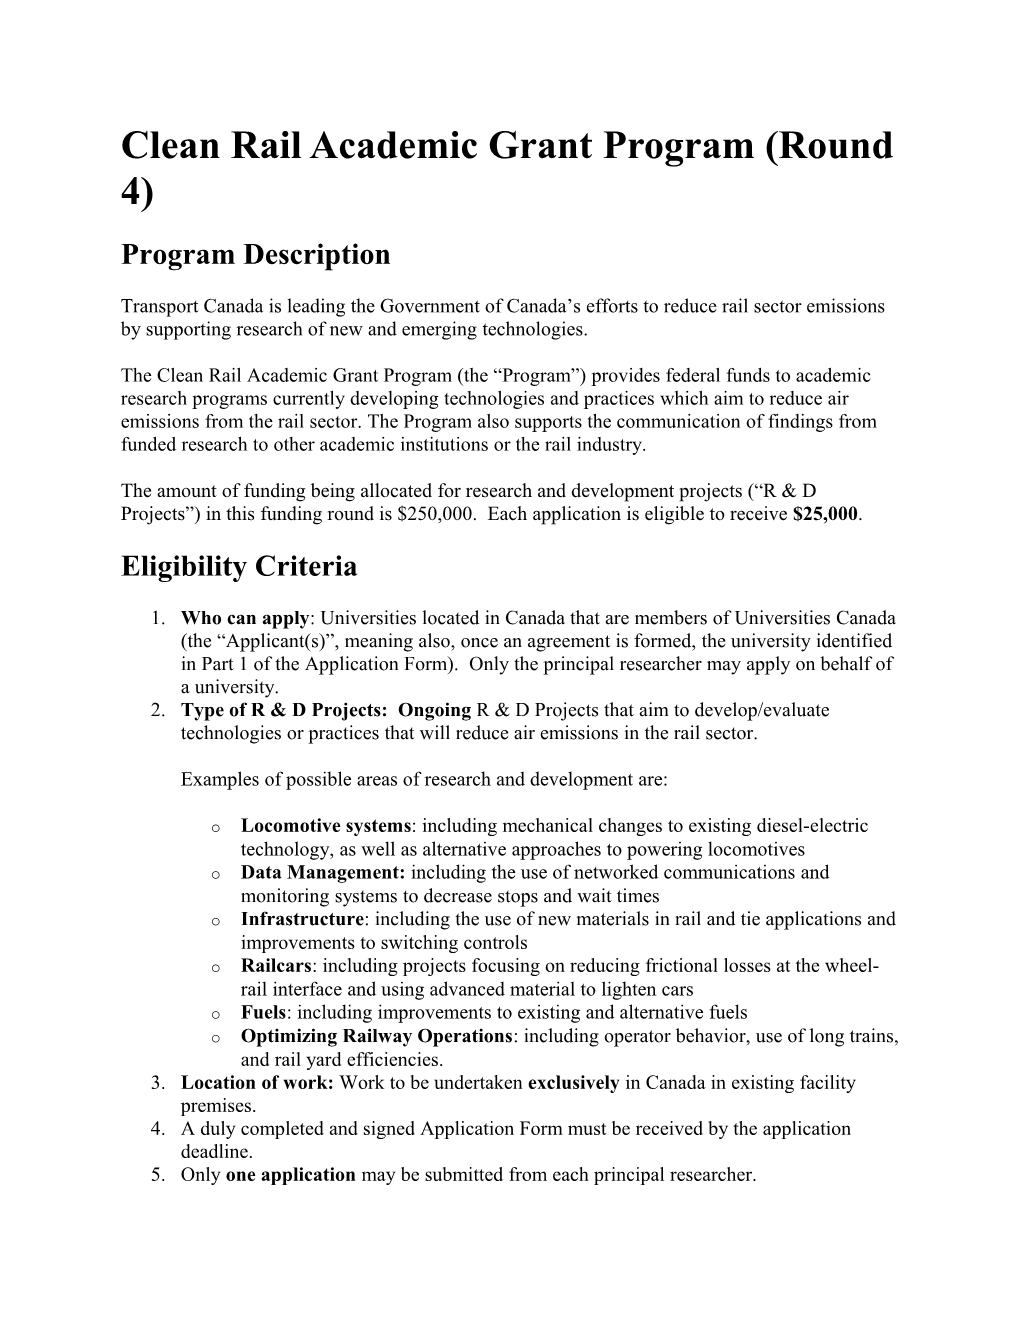 Clean Rail Academic Grant Program (Round 4)